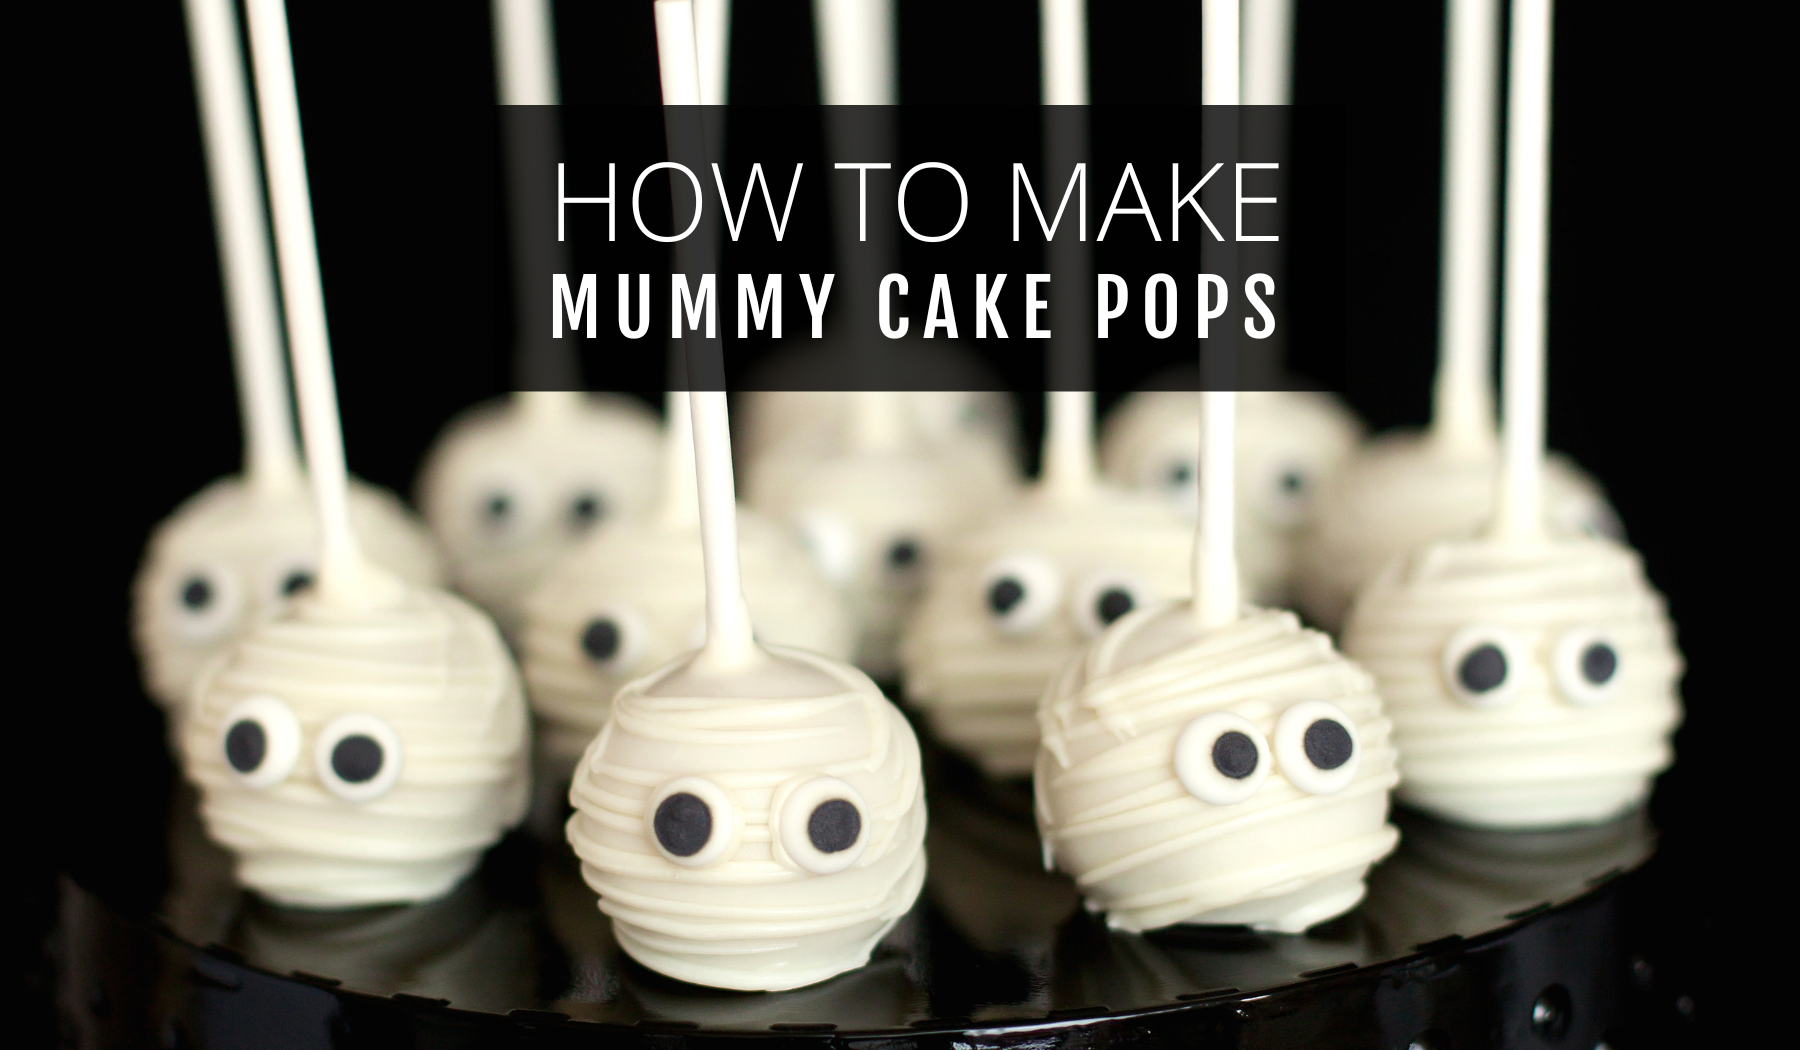 How to Make Mummy Cake Pops